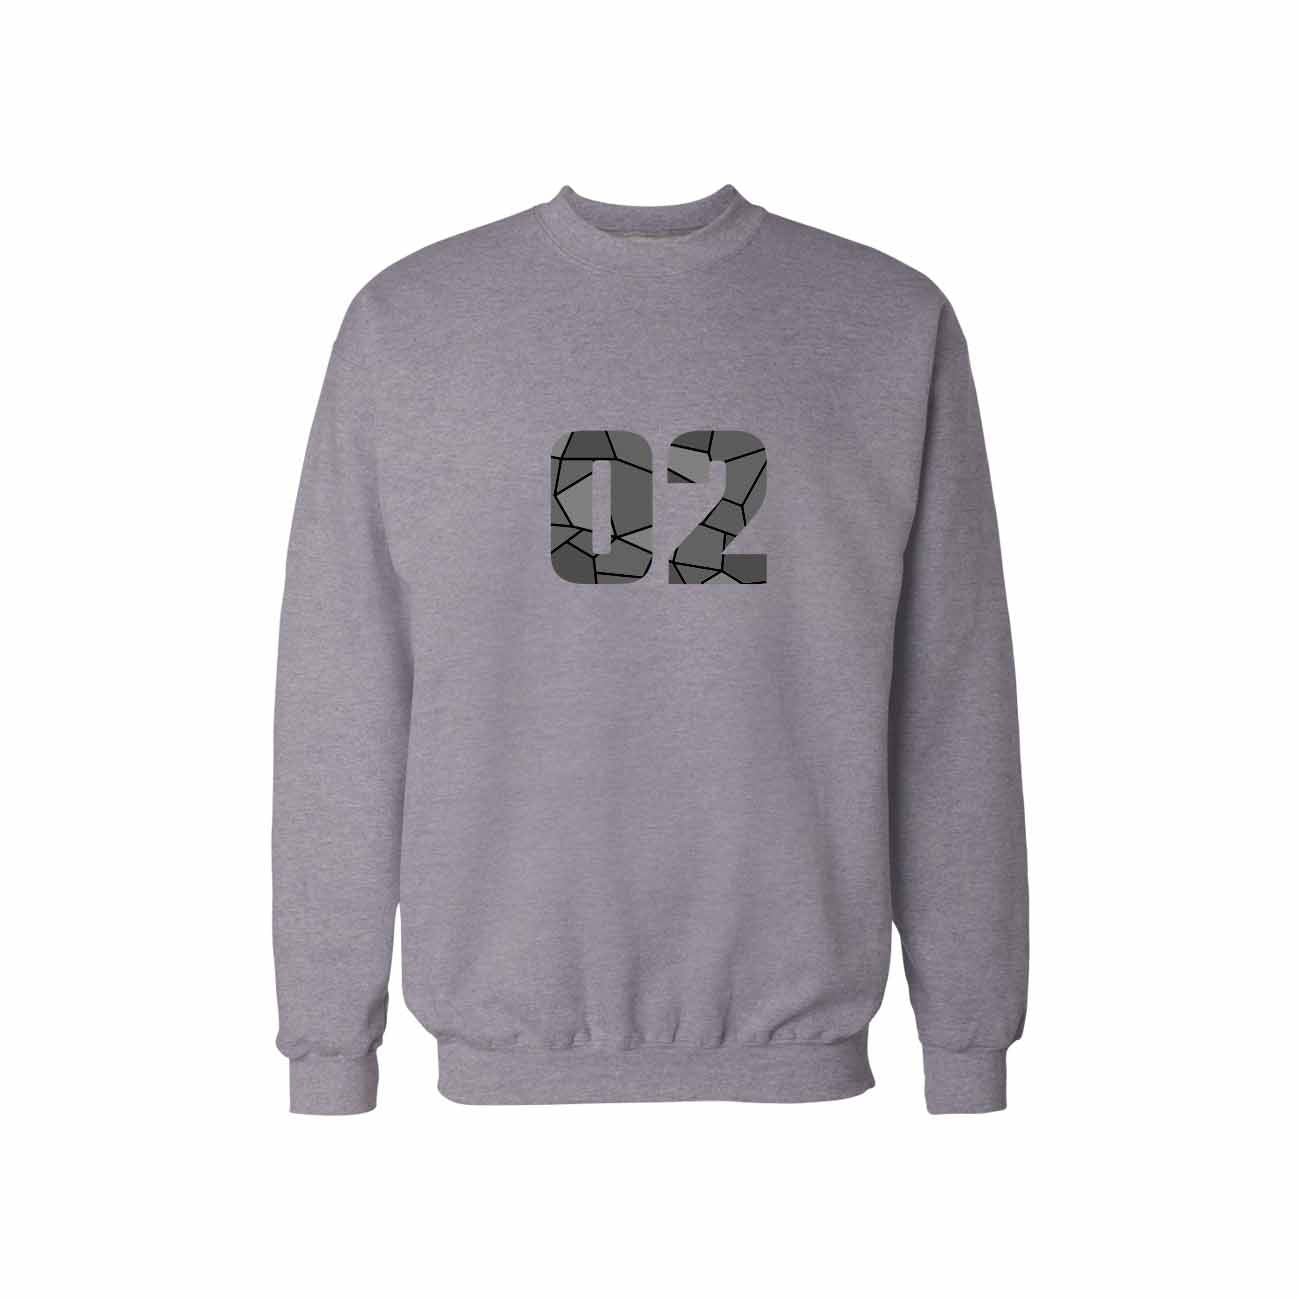 02 Number Unisex  Sweatshirt